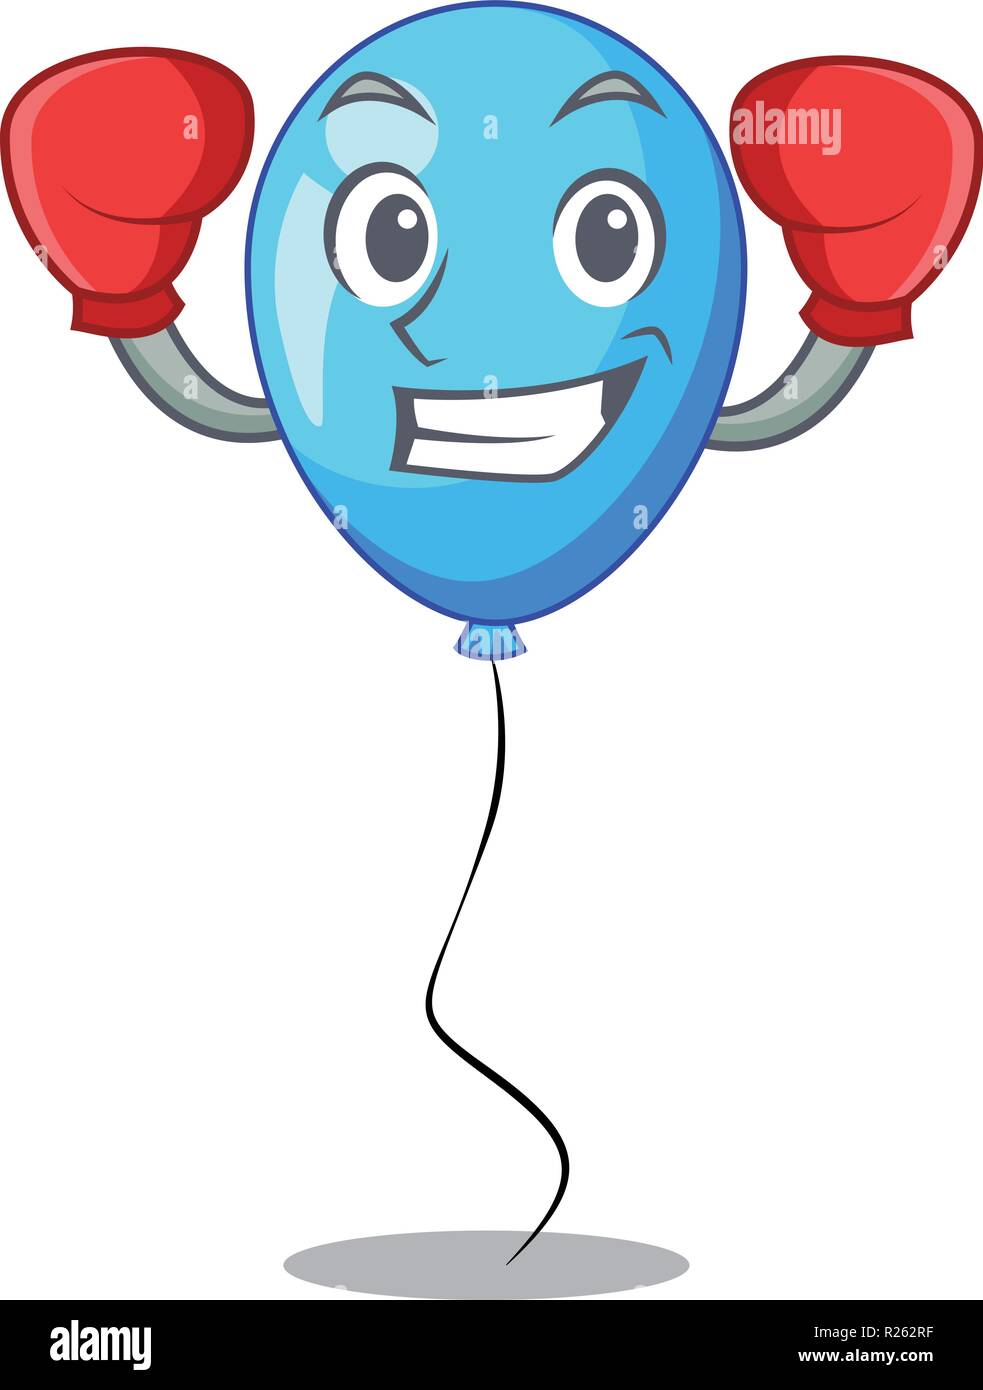 Anniversaire de boxe cartoon sur forme bleu ballon Image Vectorielle Stock  - Alamy